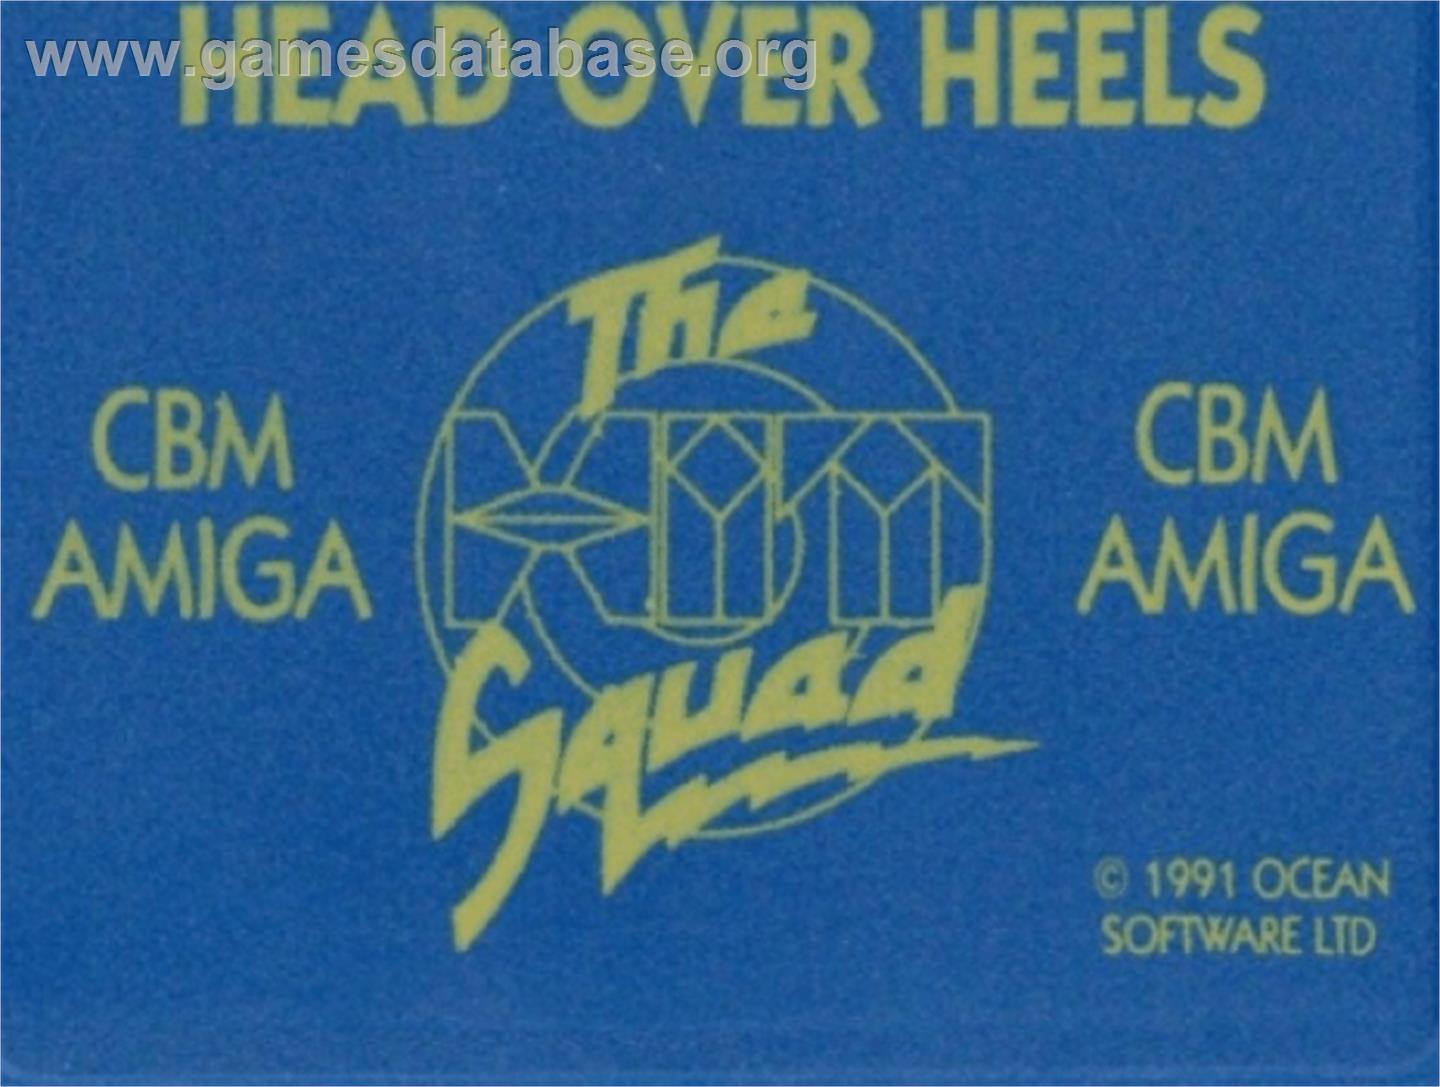 Head Over Heels - Commodore Amiga - Artwork - Cartridge Top